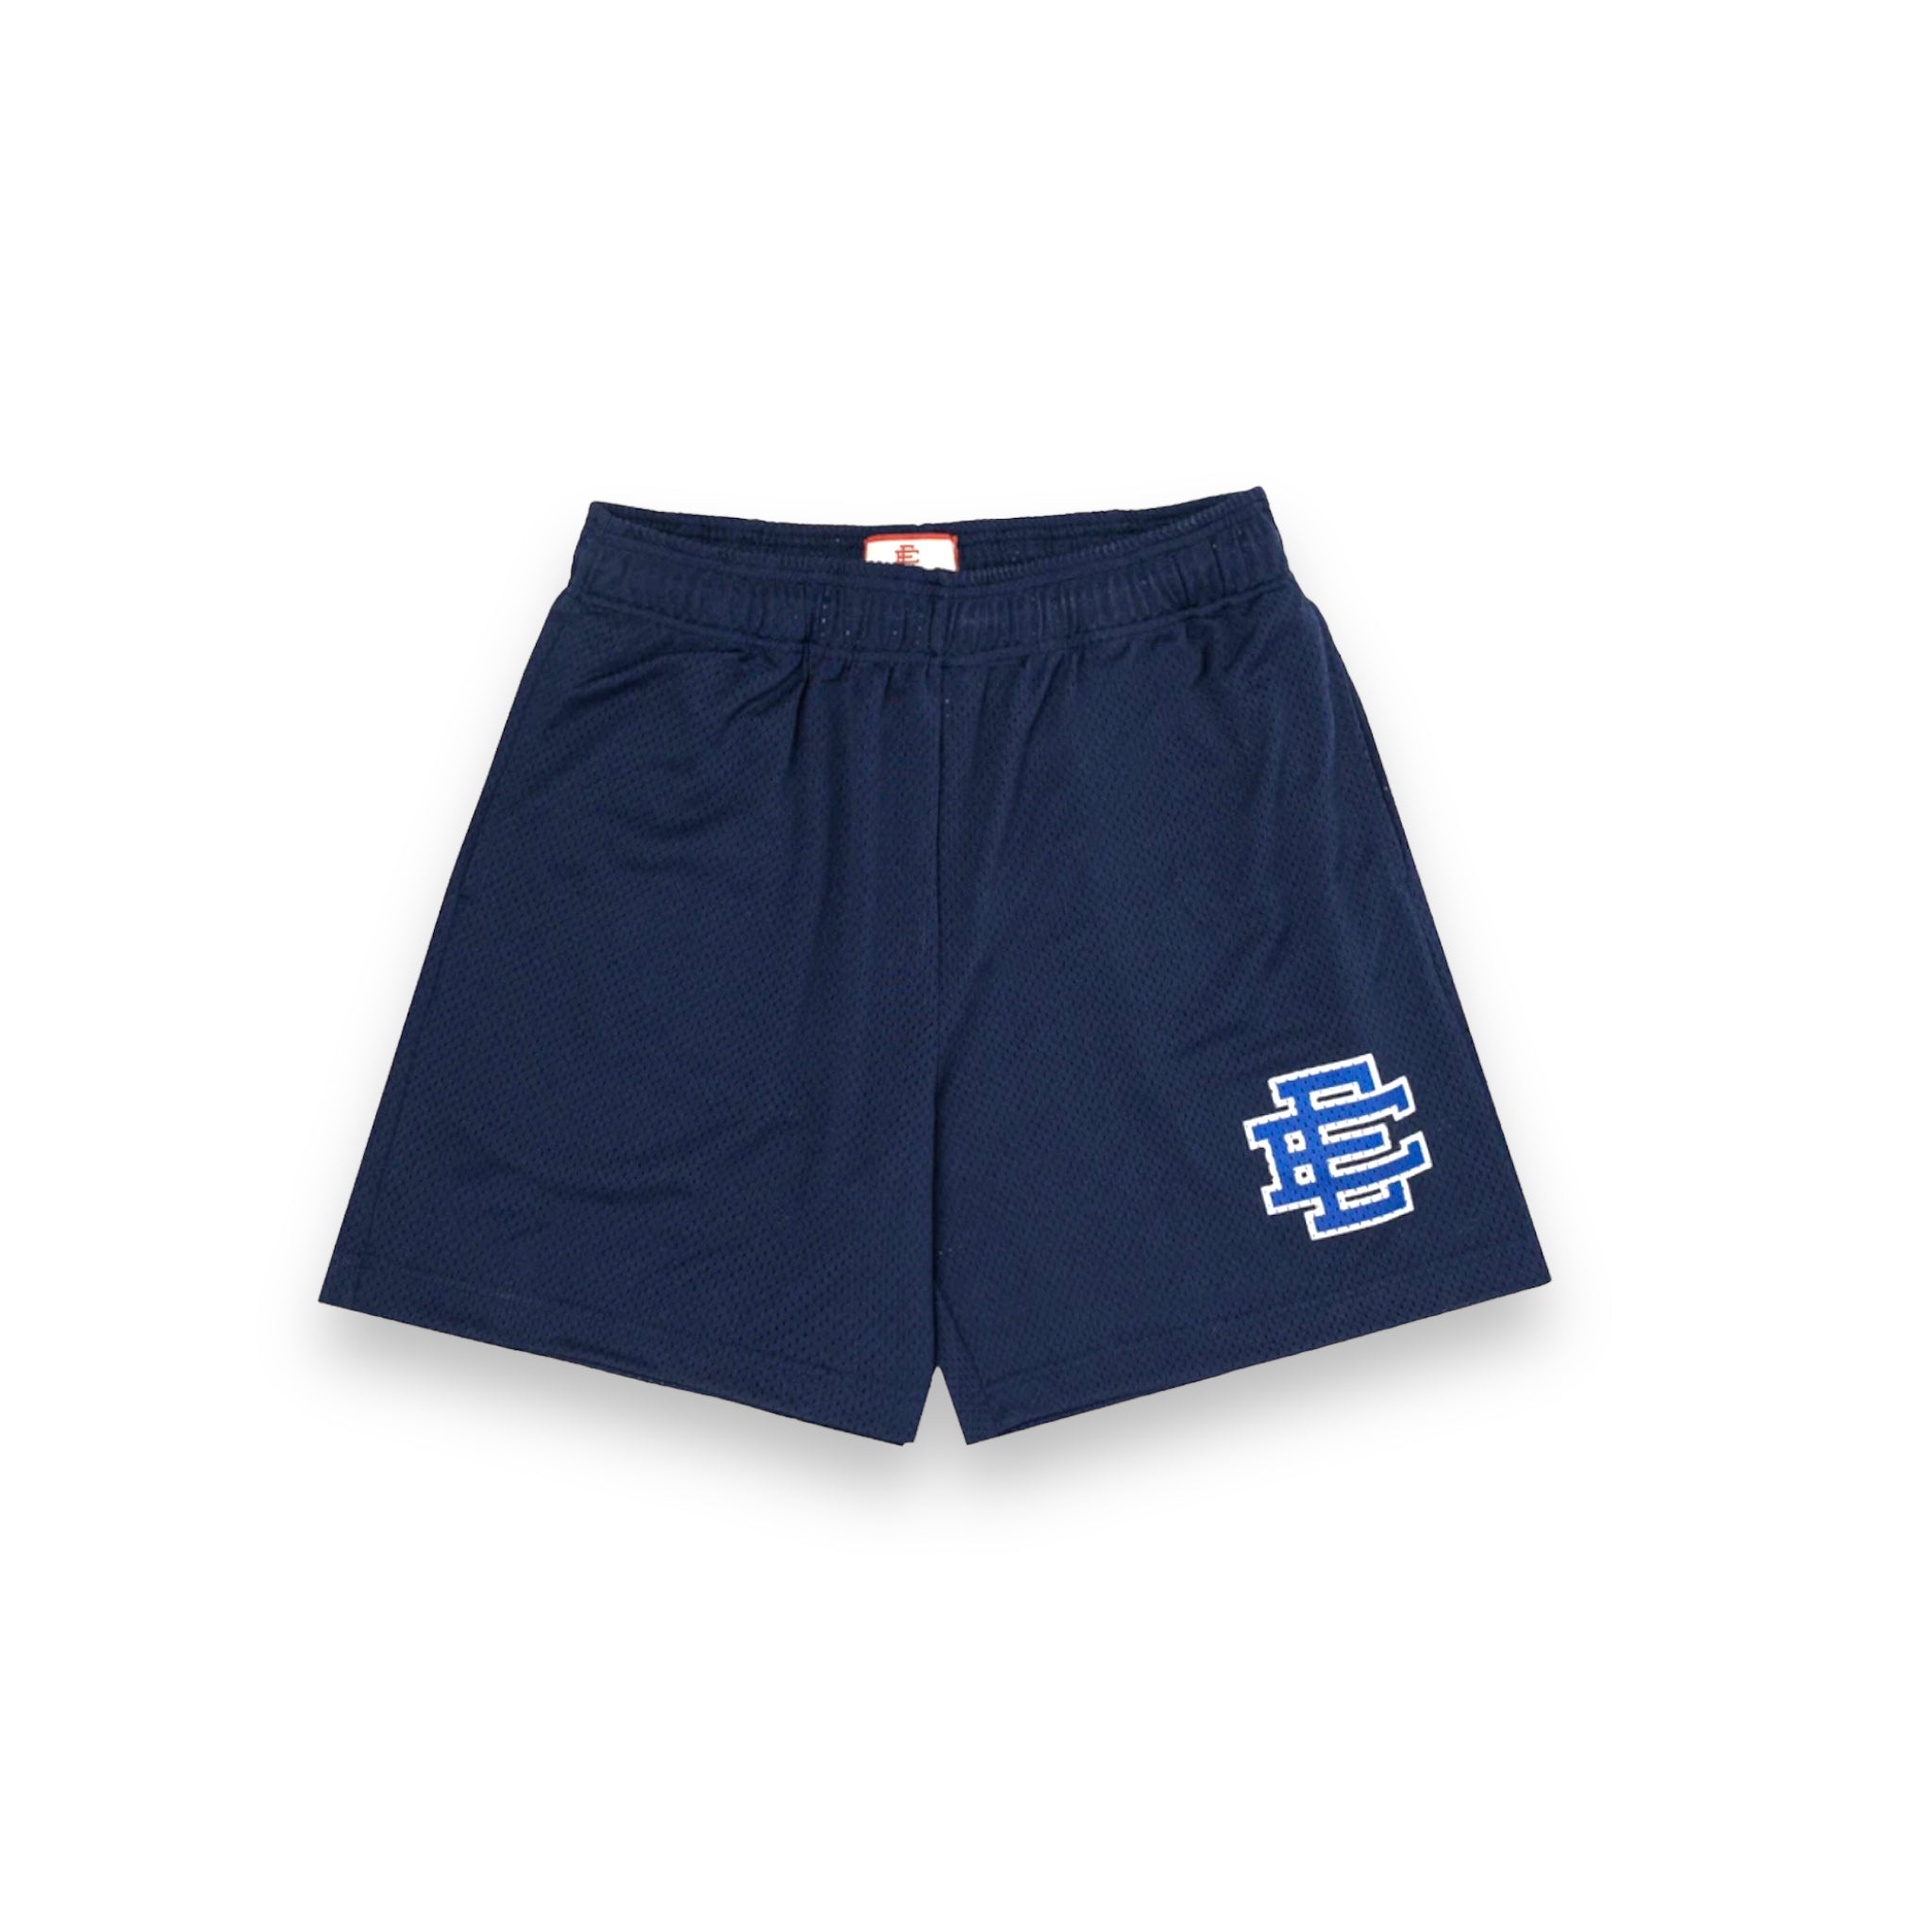 Eric Emanuel Navy/Blue Shorts